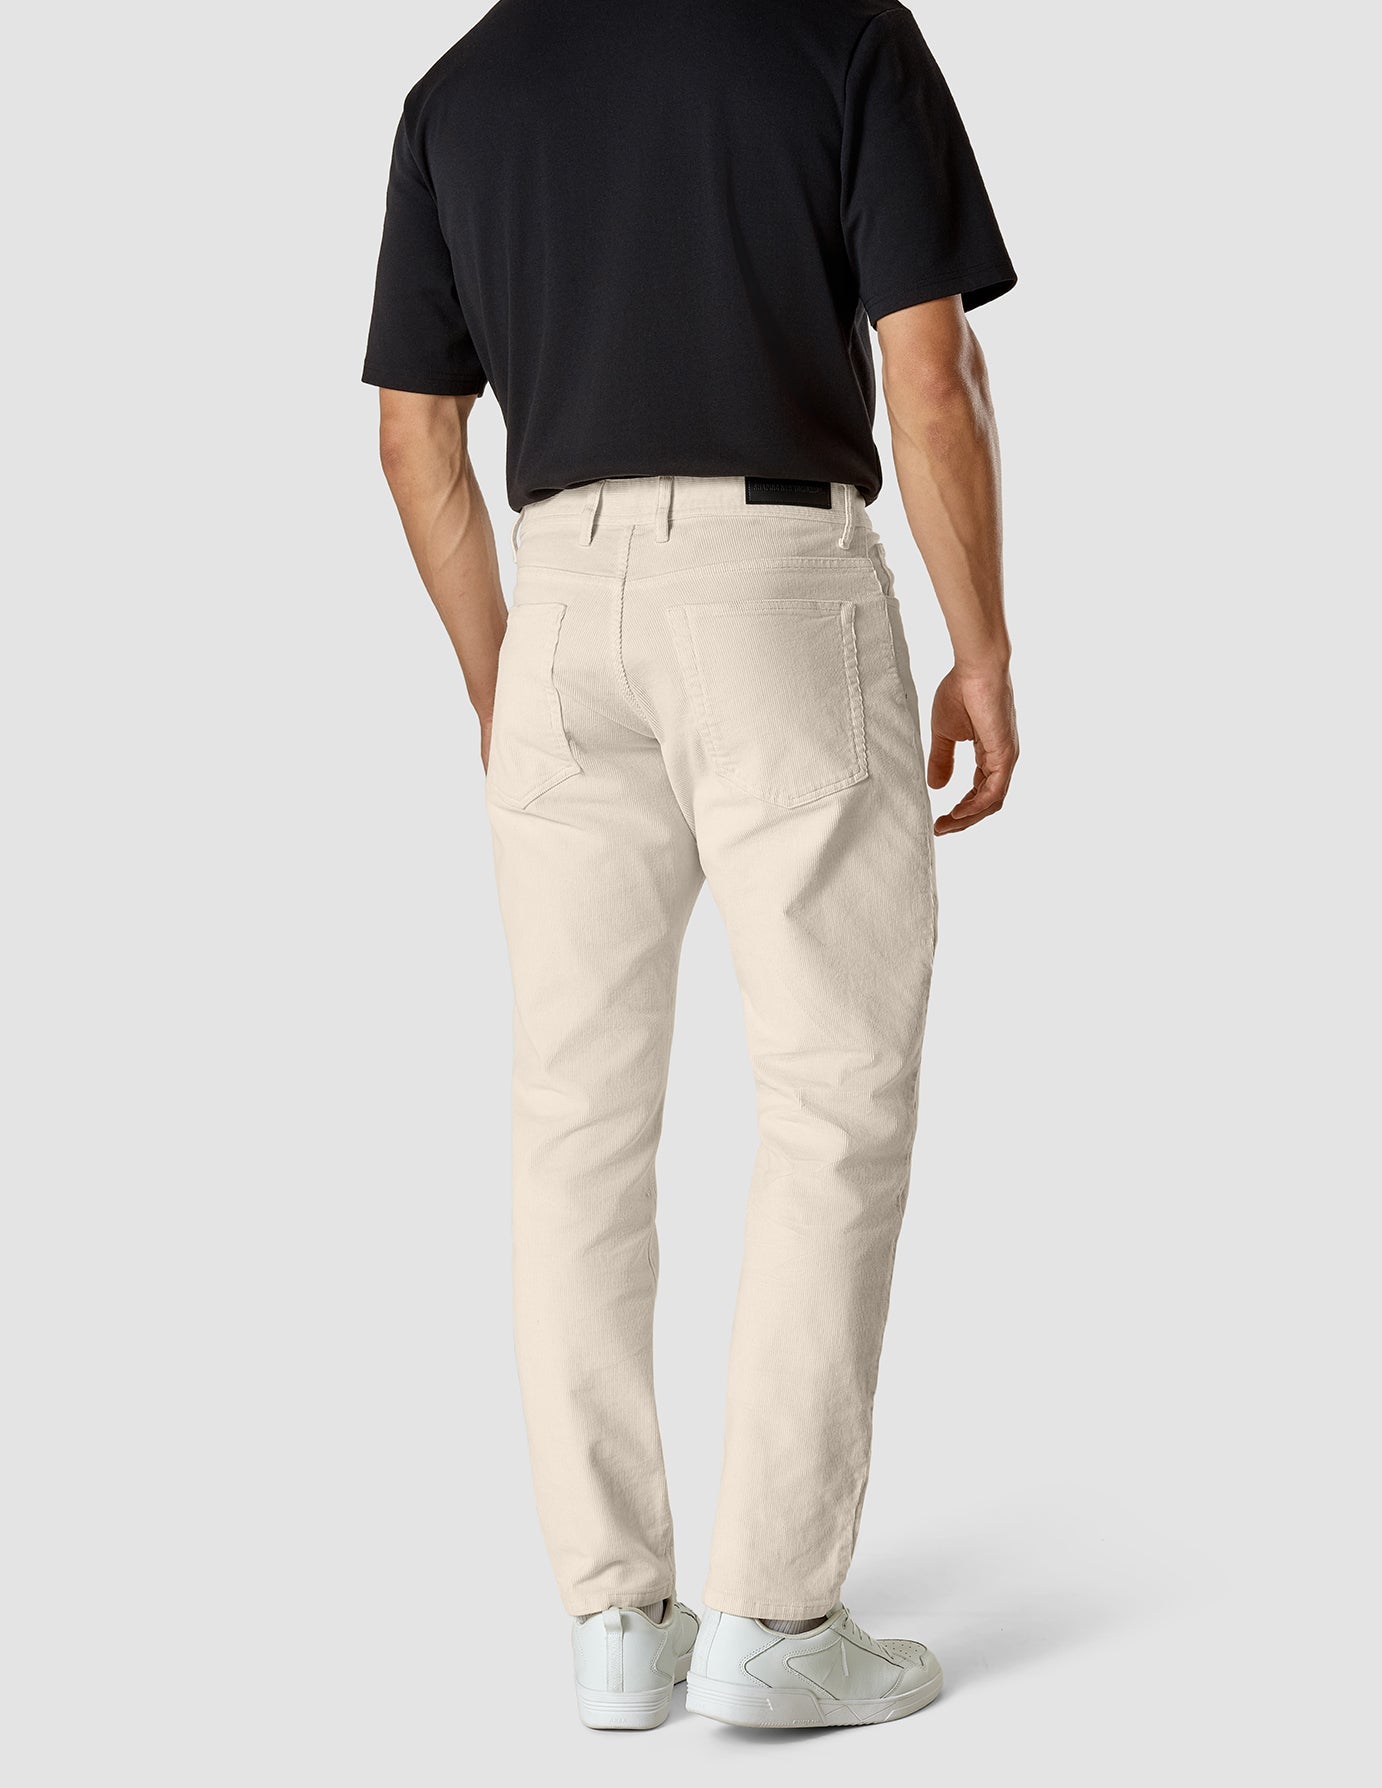 Buy Men's Linen Viscose Casual Wear Regular Fit Pants|Cottonworld